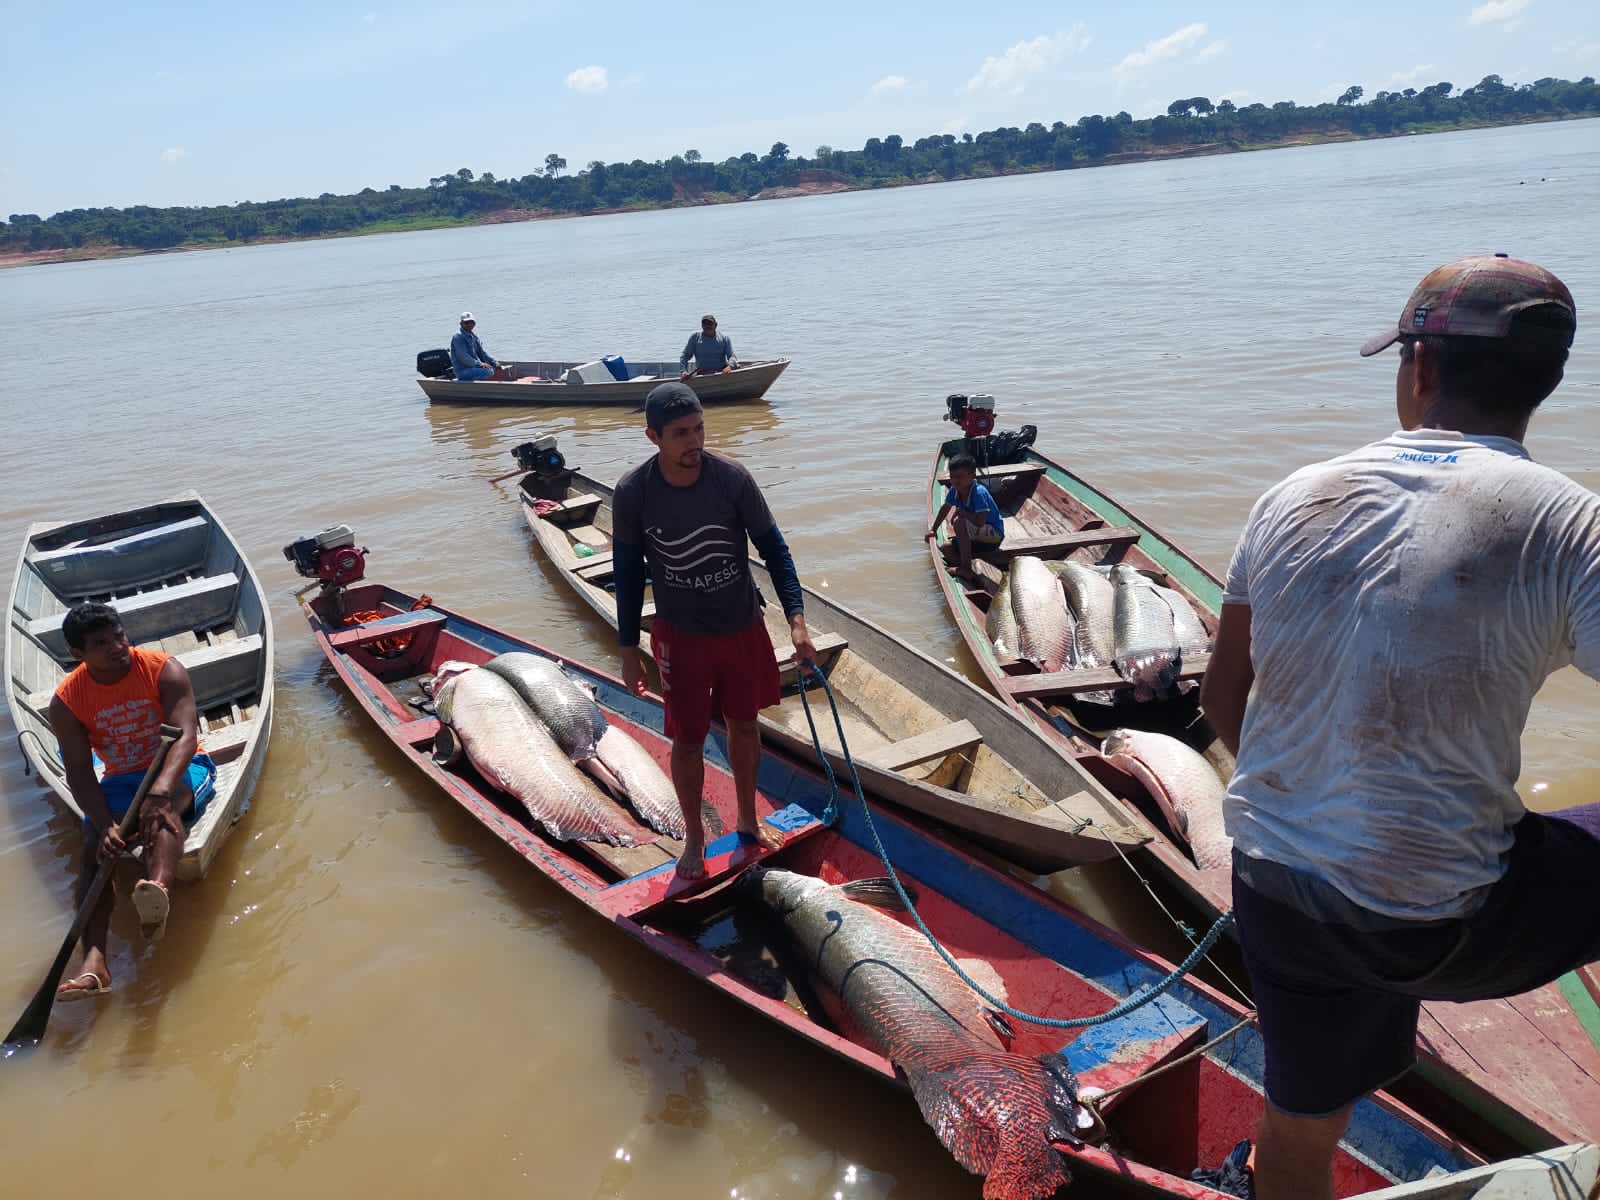 Base arpão apreende 8 toneladas de pirarucu ilegal em Coari-AM